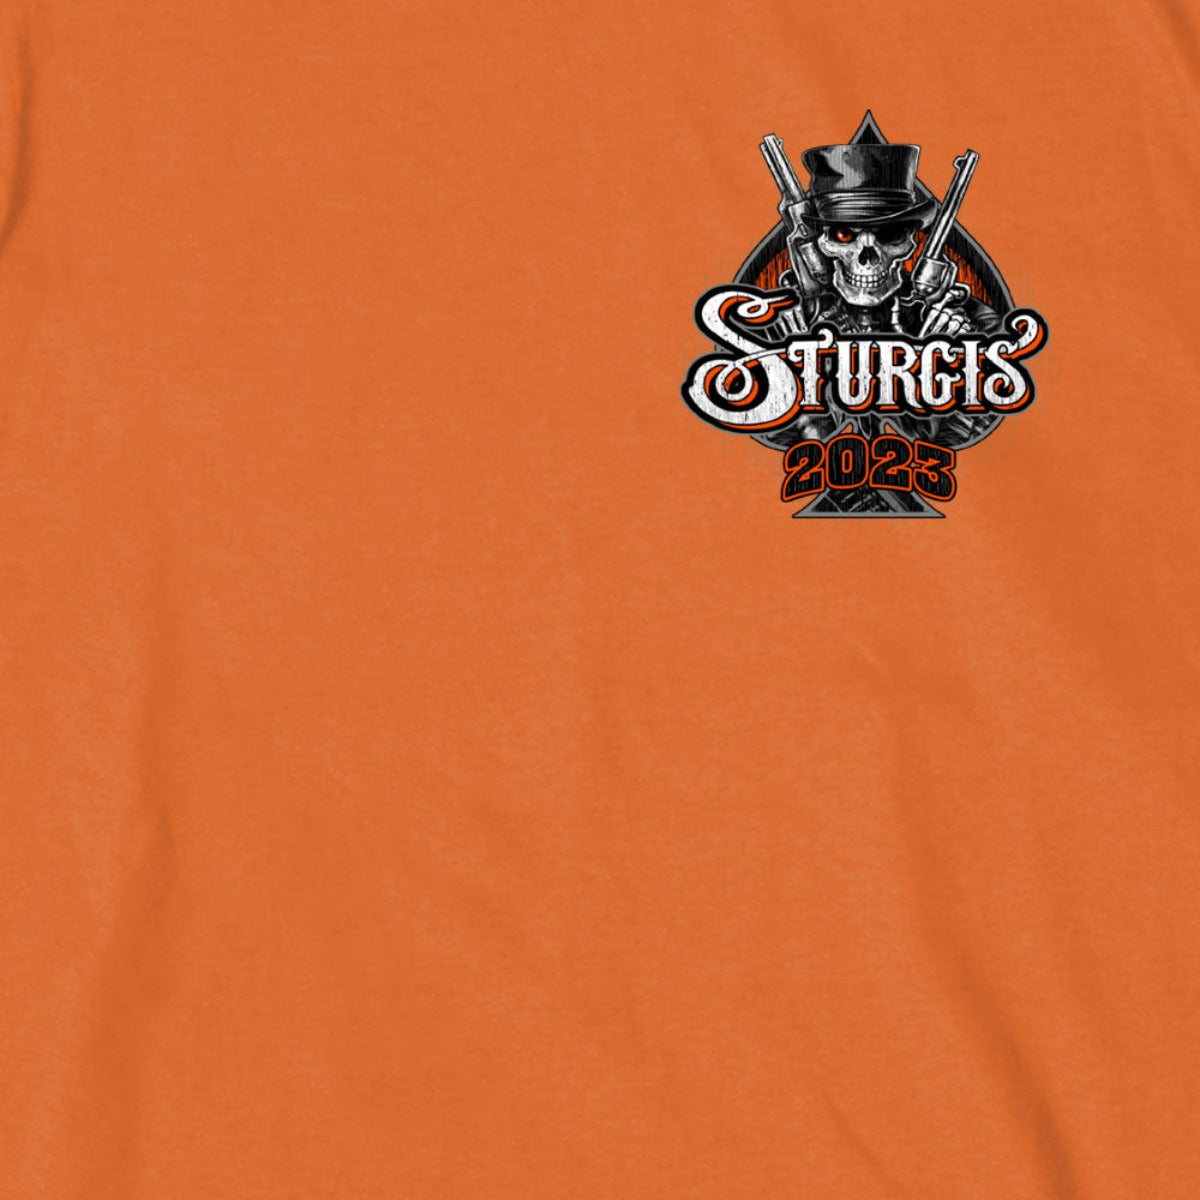 Hot Leathers 2023 Sturgis Gambler Short Sleeve T-Shirt, Orange